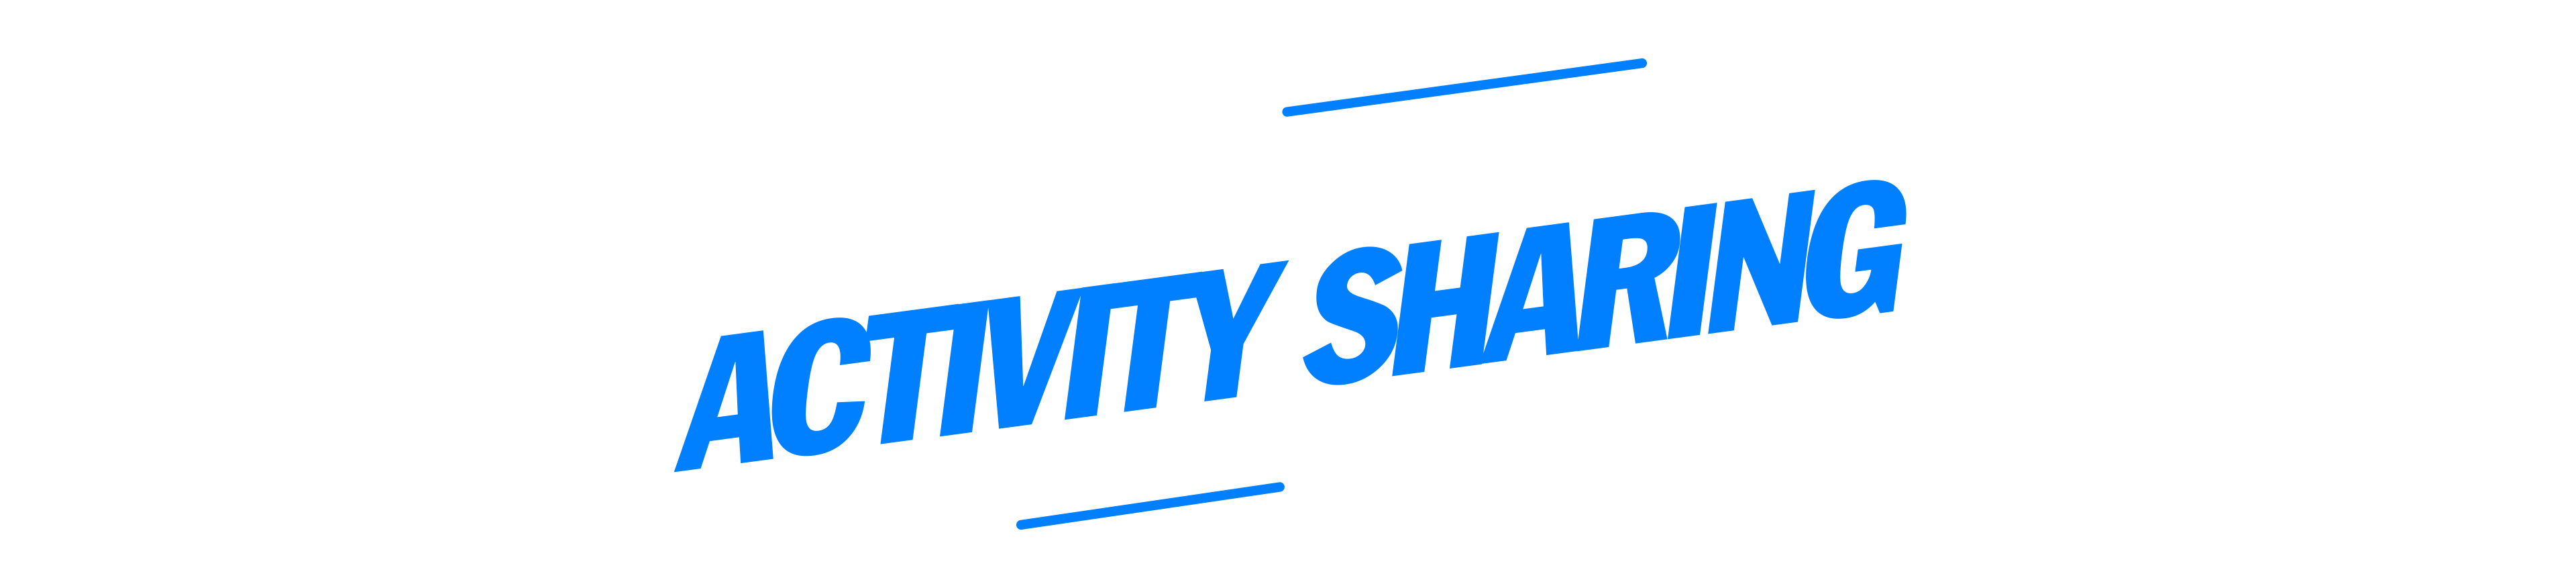 test-ride-ac-title